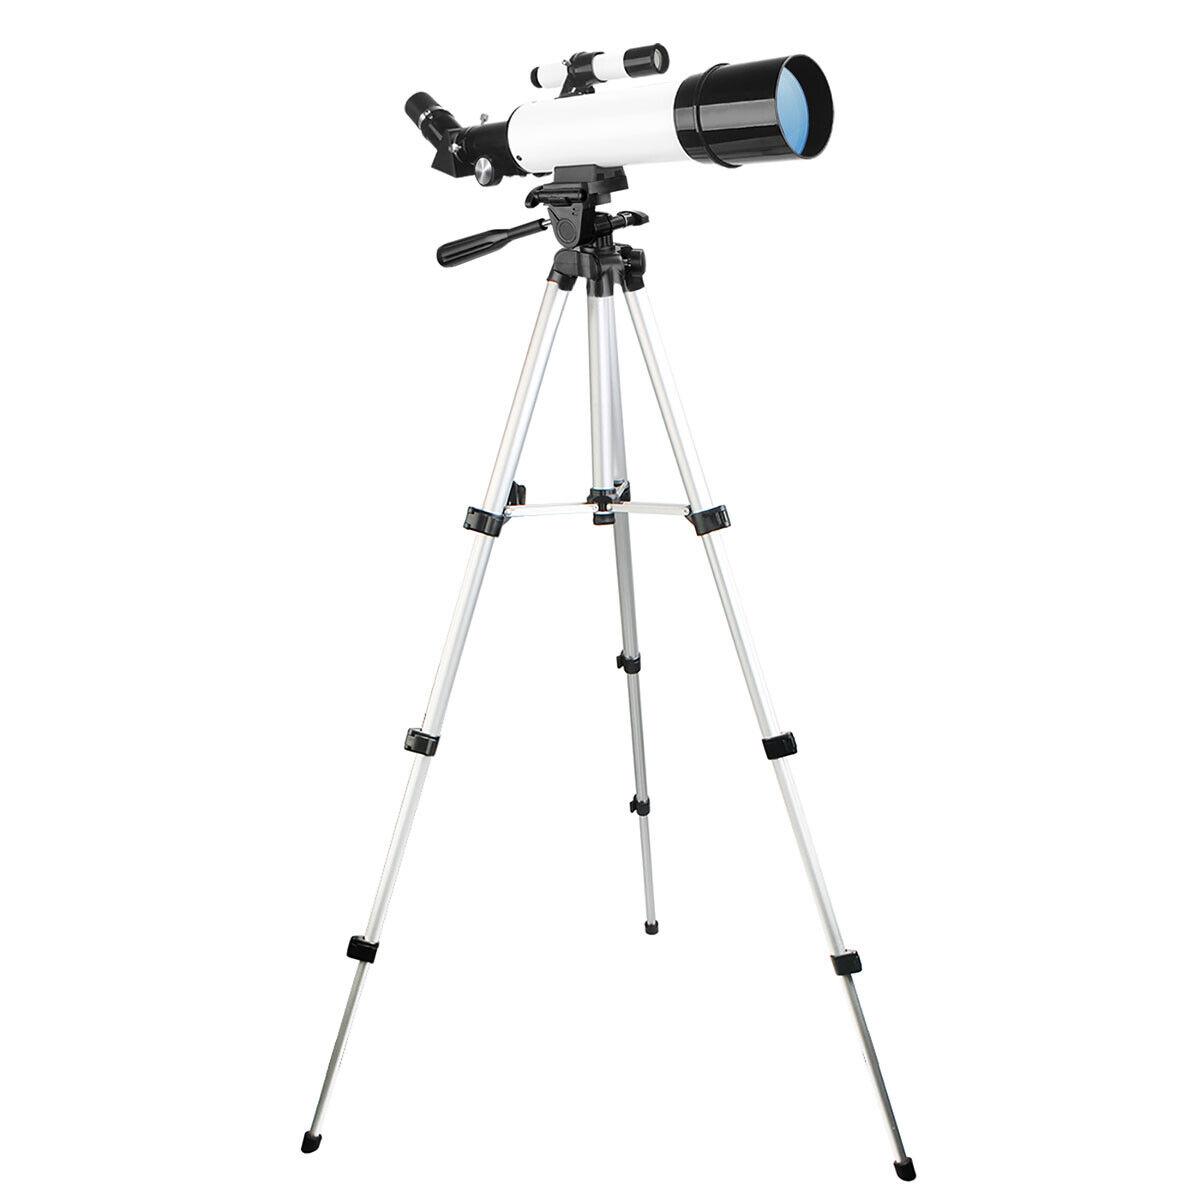 SVBONY SV501P 60400mm Refractor Telescope Set for Astronomical Viewing beginner